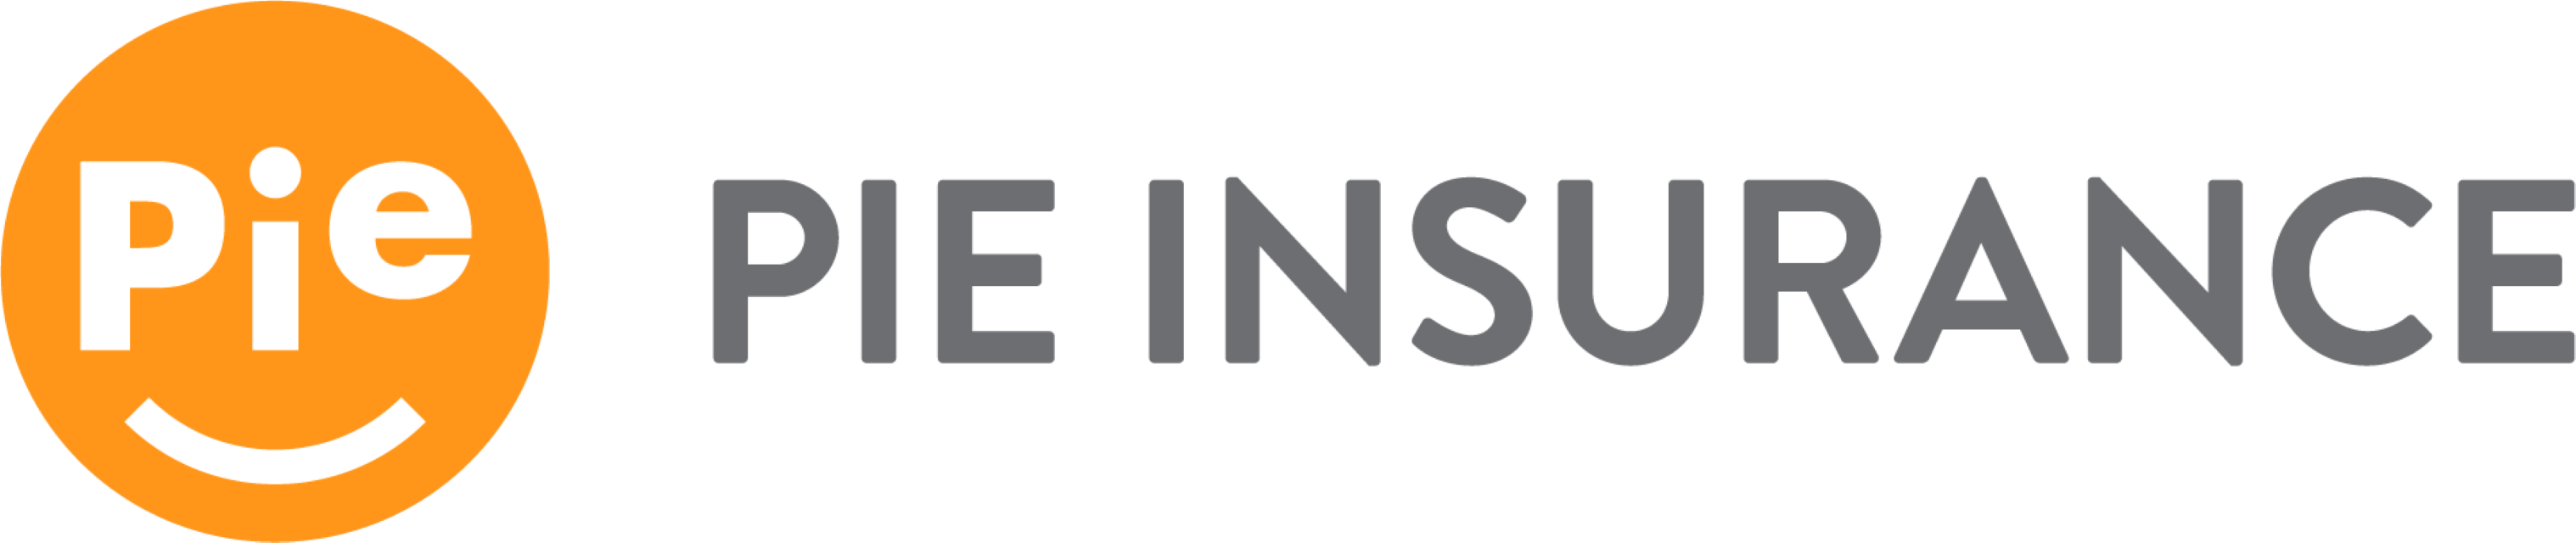 Pie Insurance Services Inc Company Logo